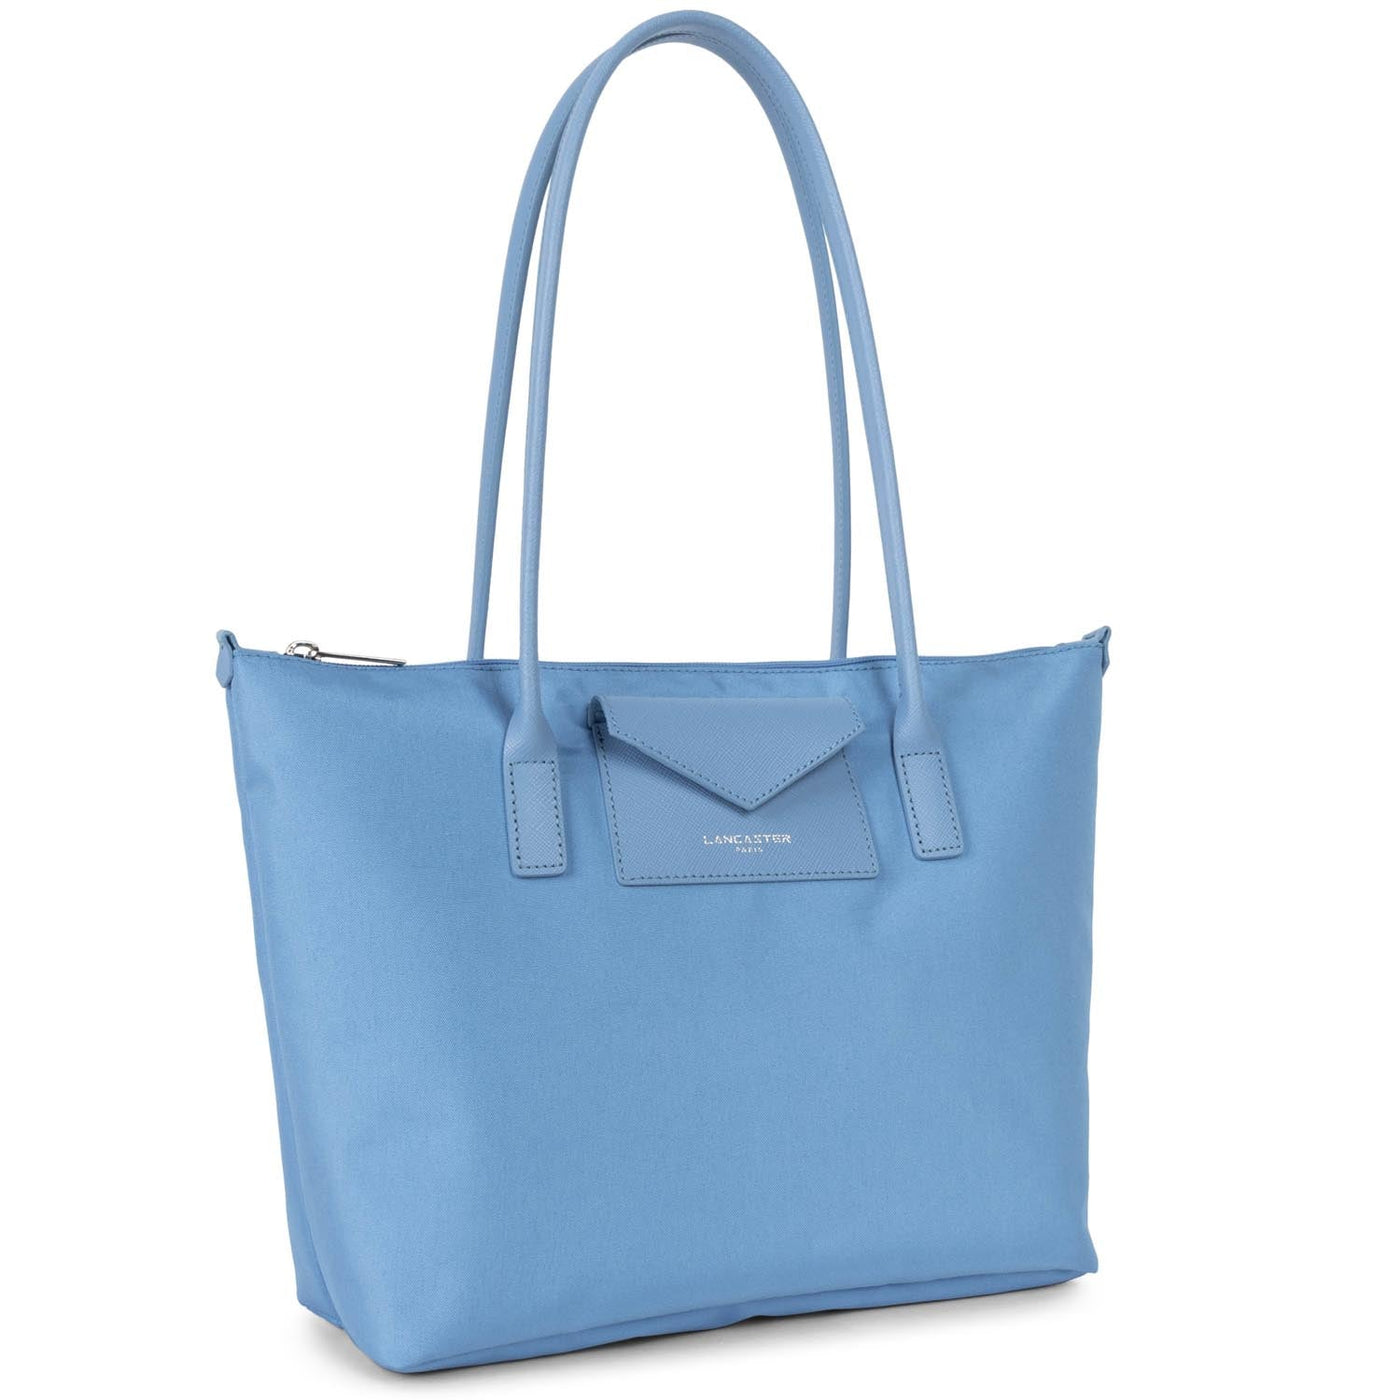 m tote bag - smart kba #couleur_bleu-azur